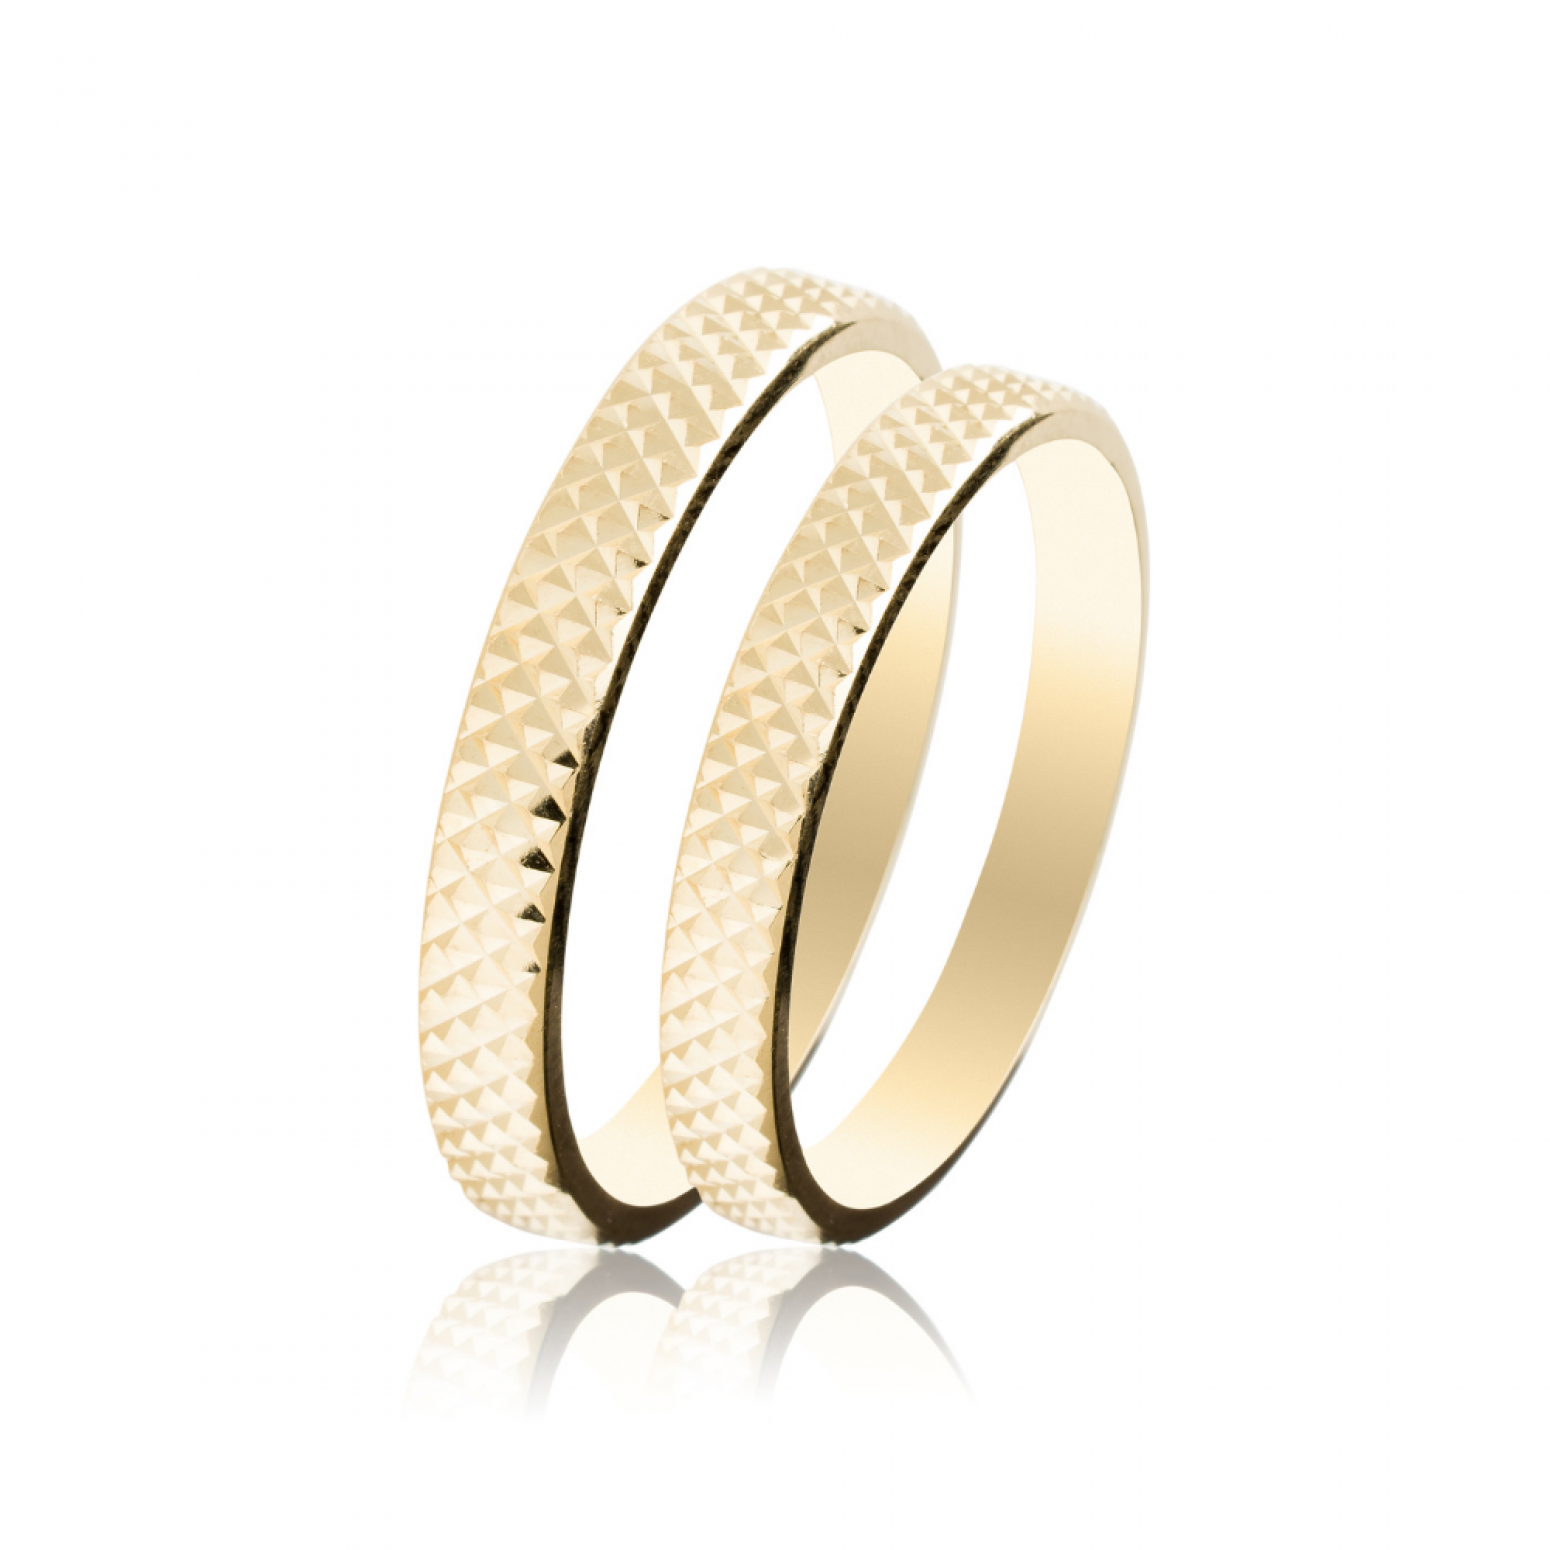 Maschio Femmina wedding rings in yellow gold, K9, pair da4028 WEDDING RINGS Κοσμηματα - chrilia.gr